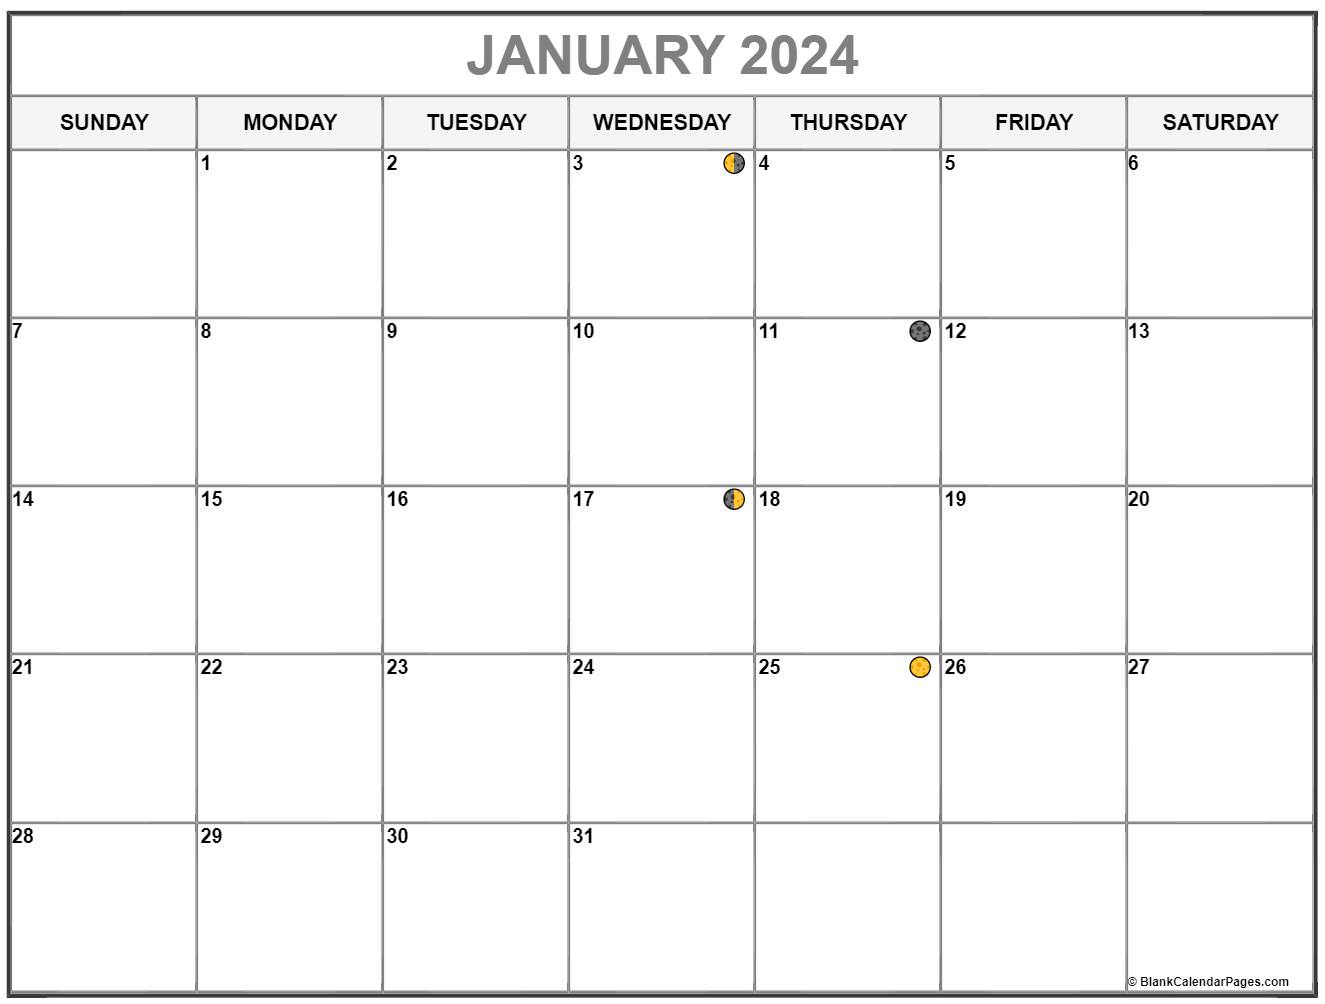 2023-january-calendars-handy-calendars-photos